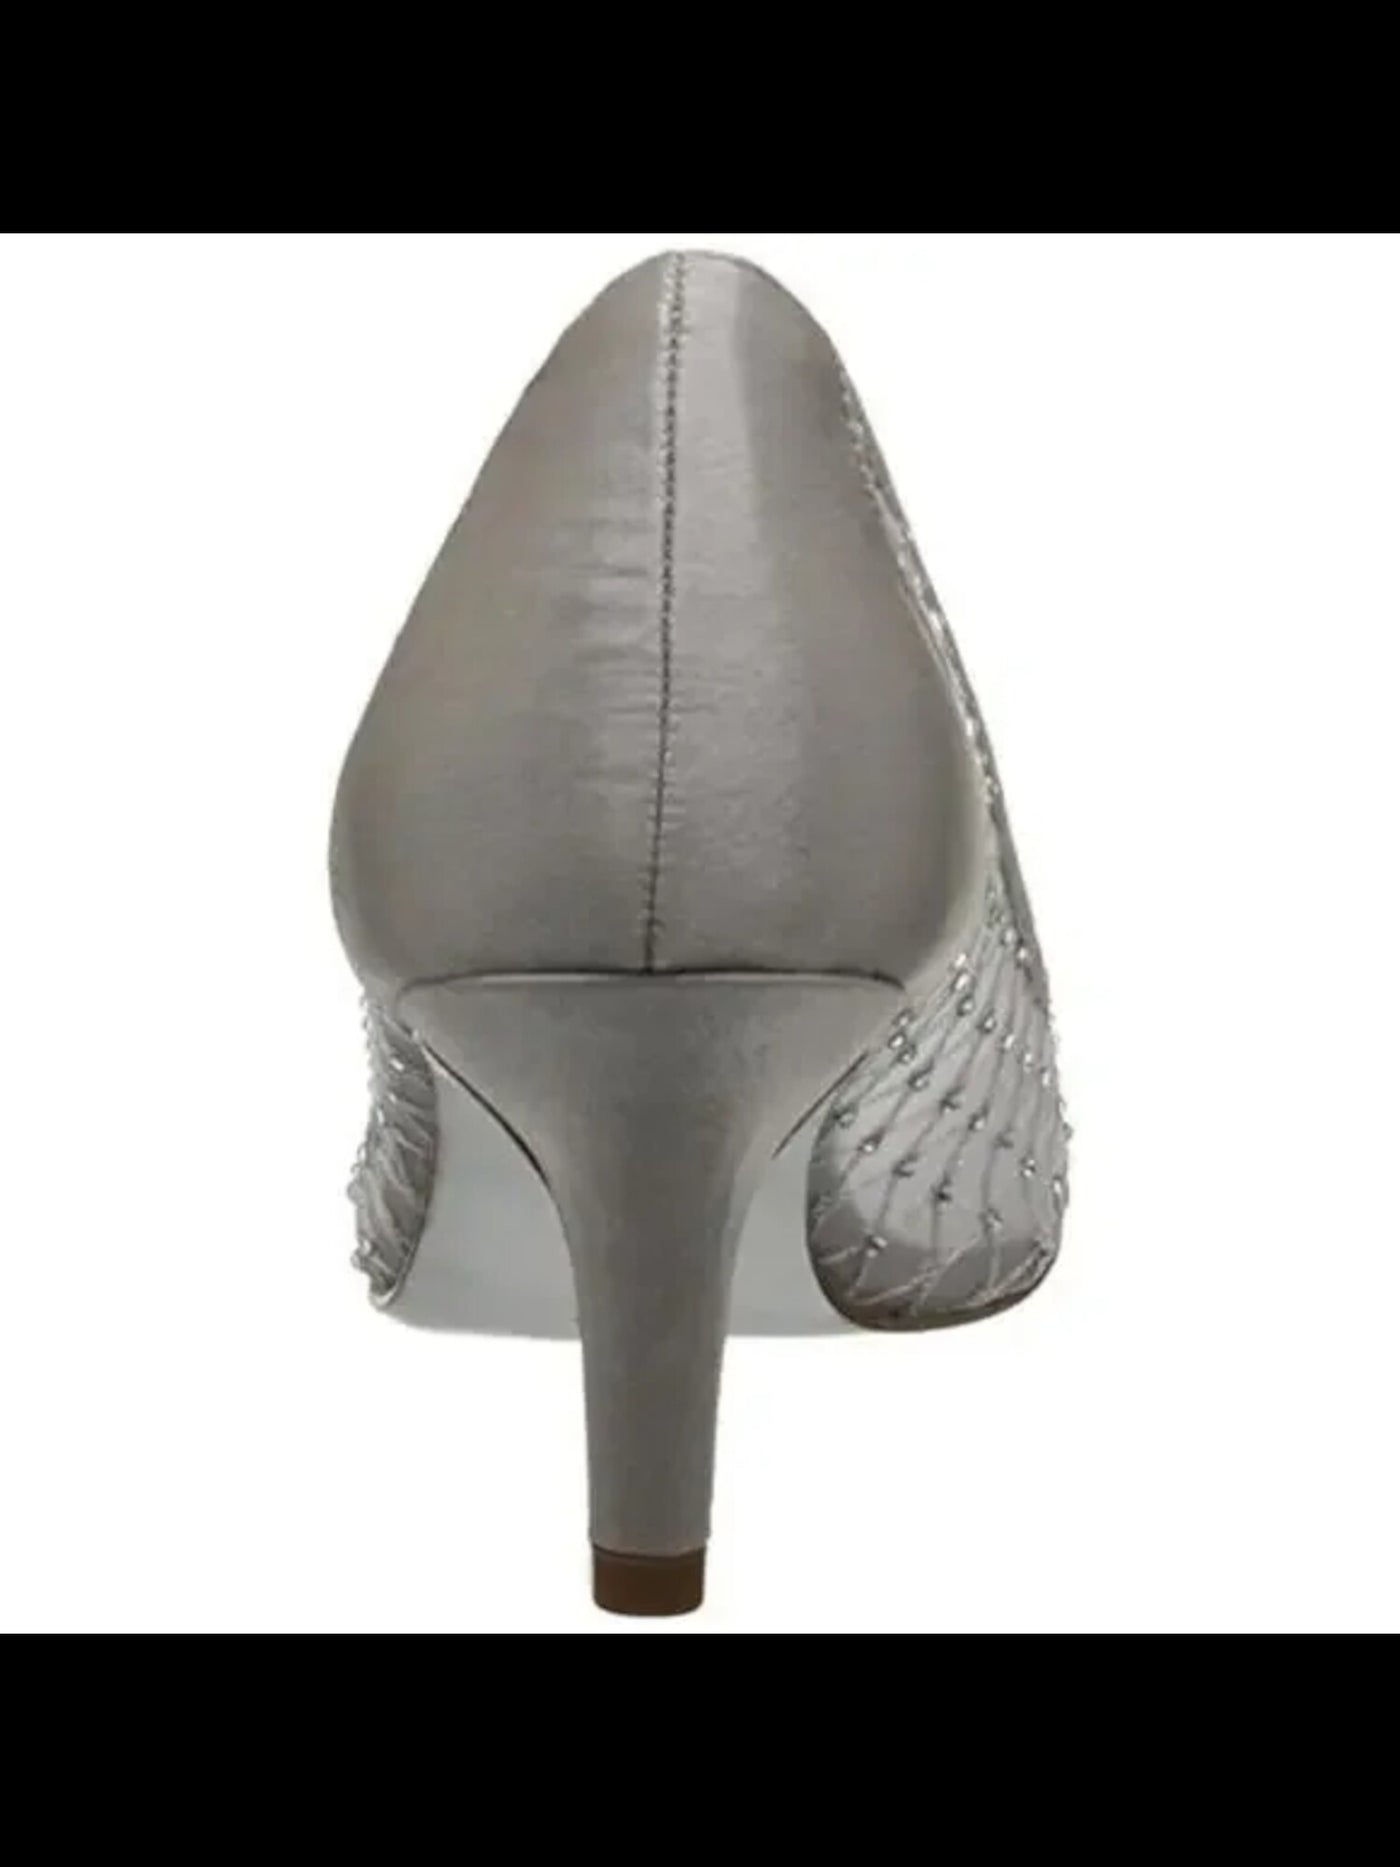 ADRIANNA PAPELL Womens Silver Mesh Rhinestone Padded Jamie Peep Toe Kitten Heel Slip On Leather Pumps Shoes 11 M